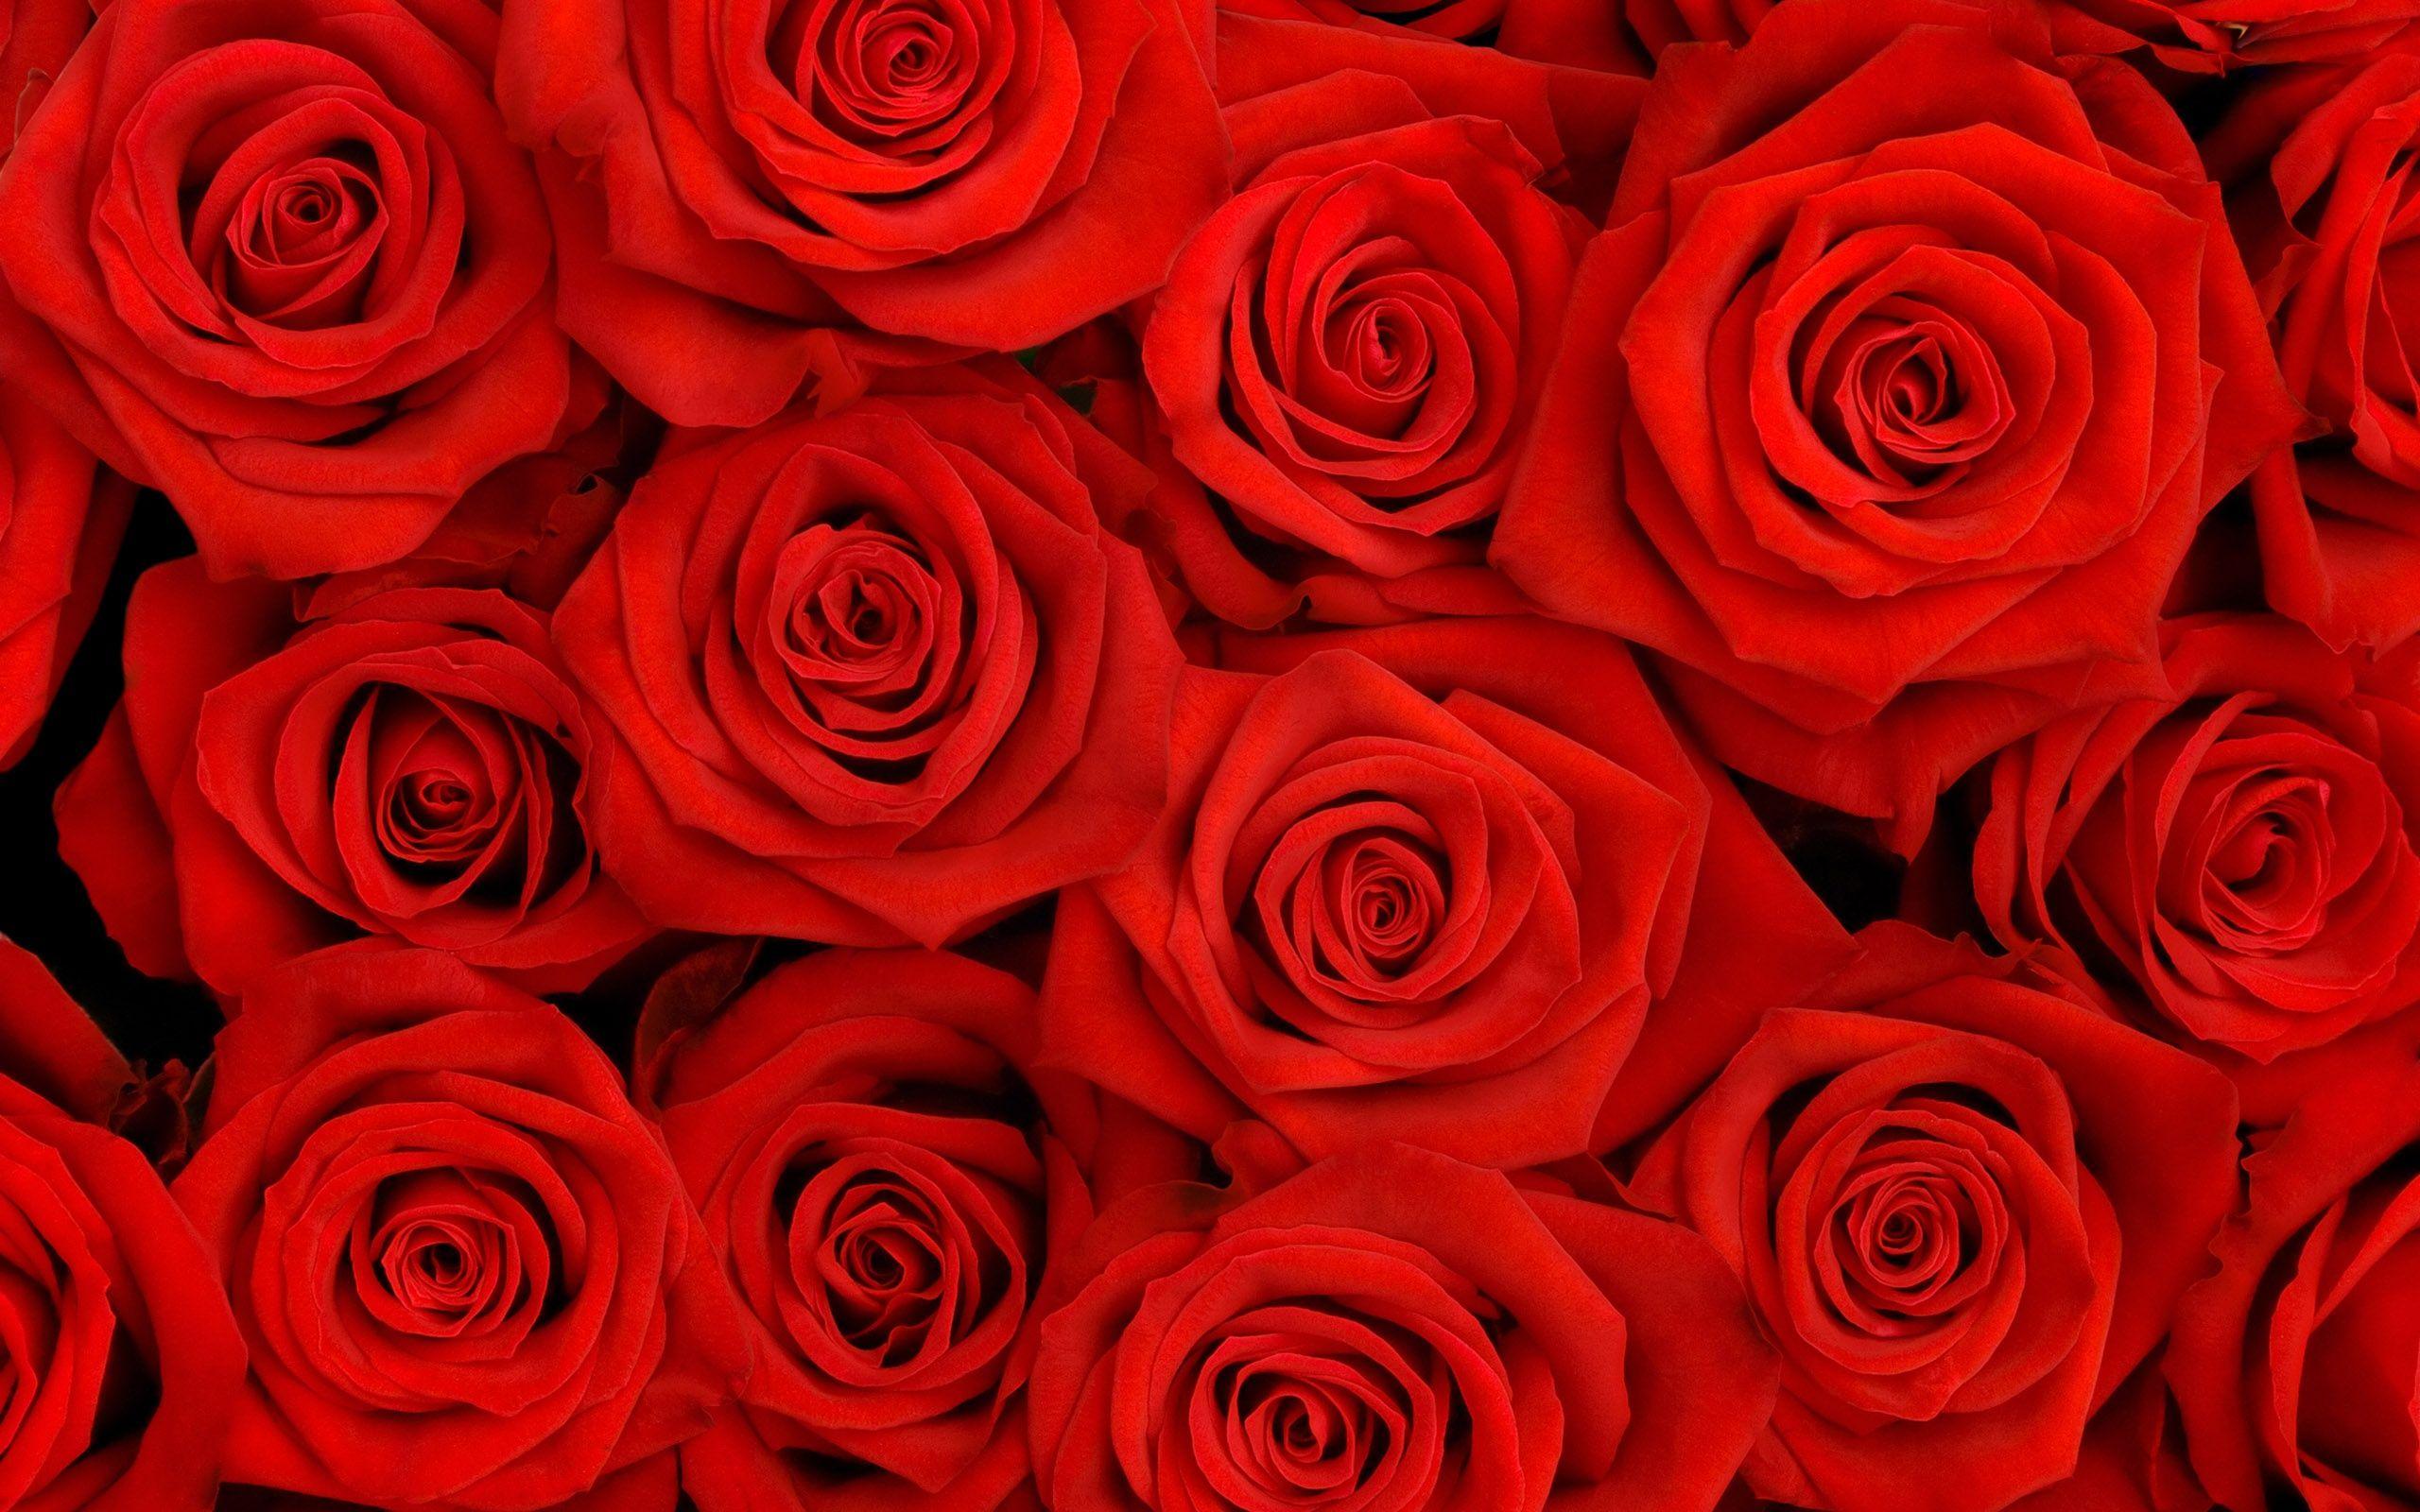 Lovely Roses HQ Wallpaper in jpg format for free download